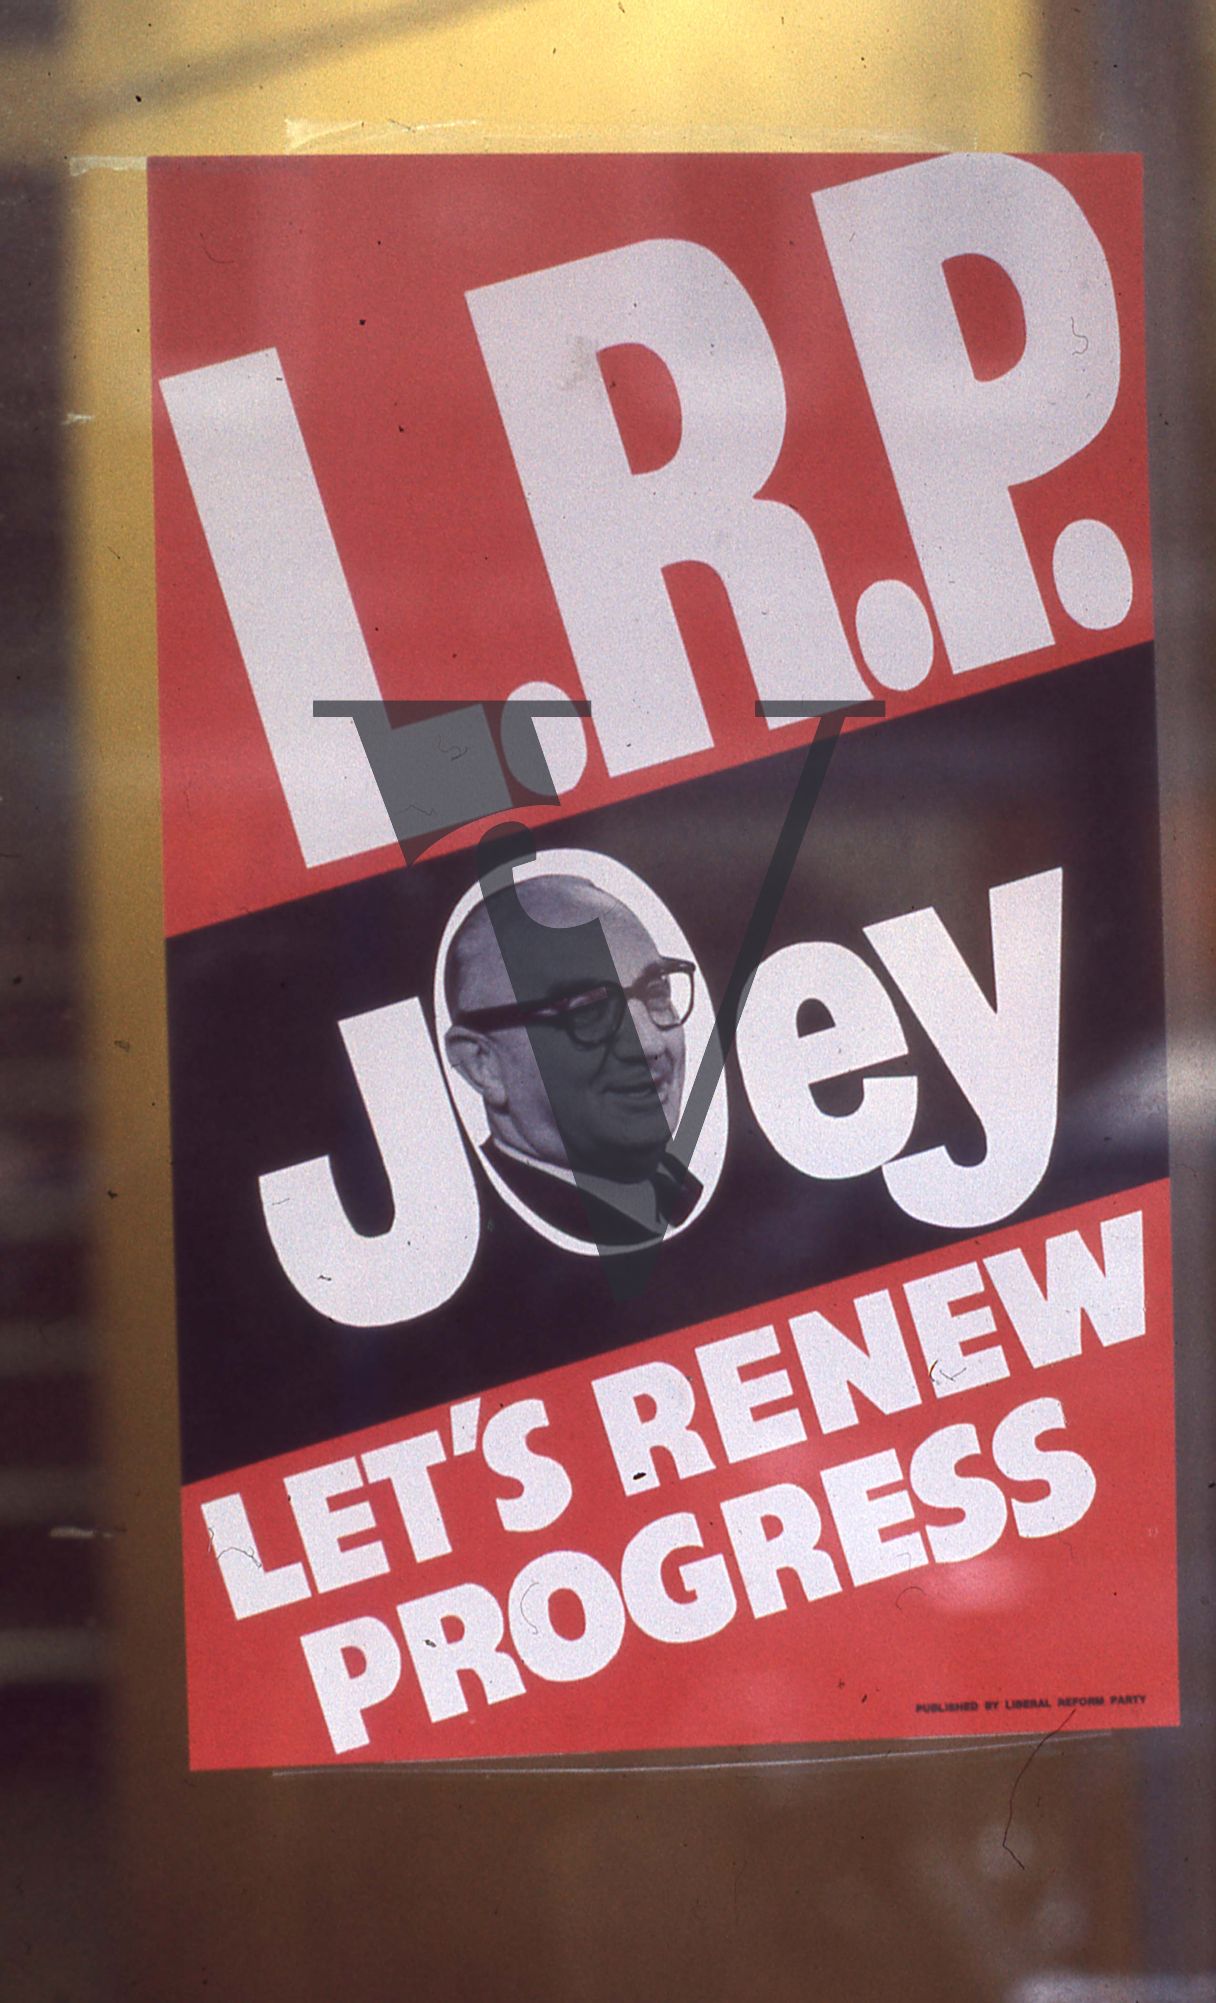 Newfoundland, Joey Smallwood, Liberal Reform poster, Let's Renew Progress.